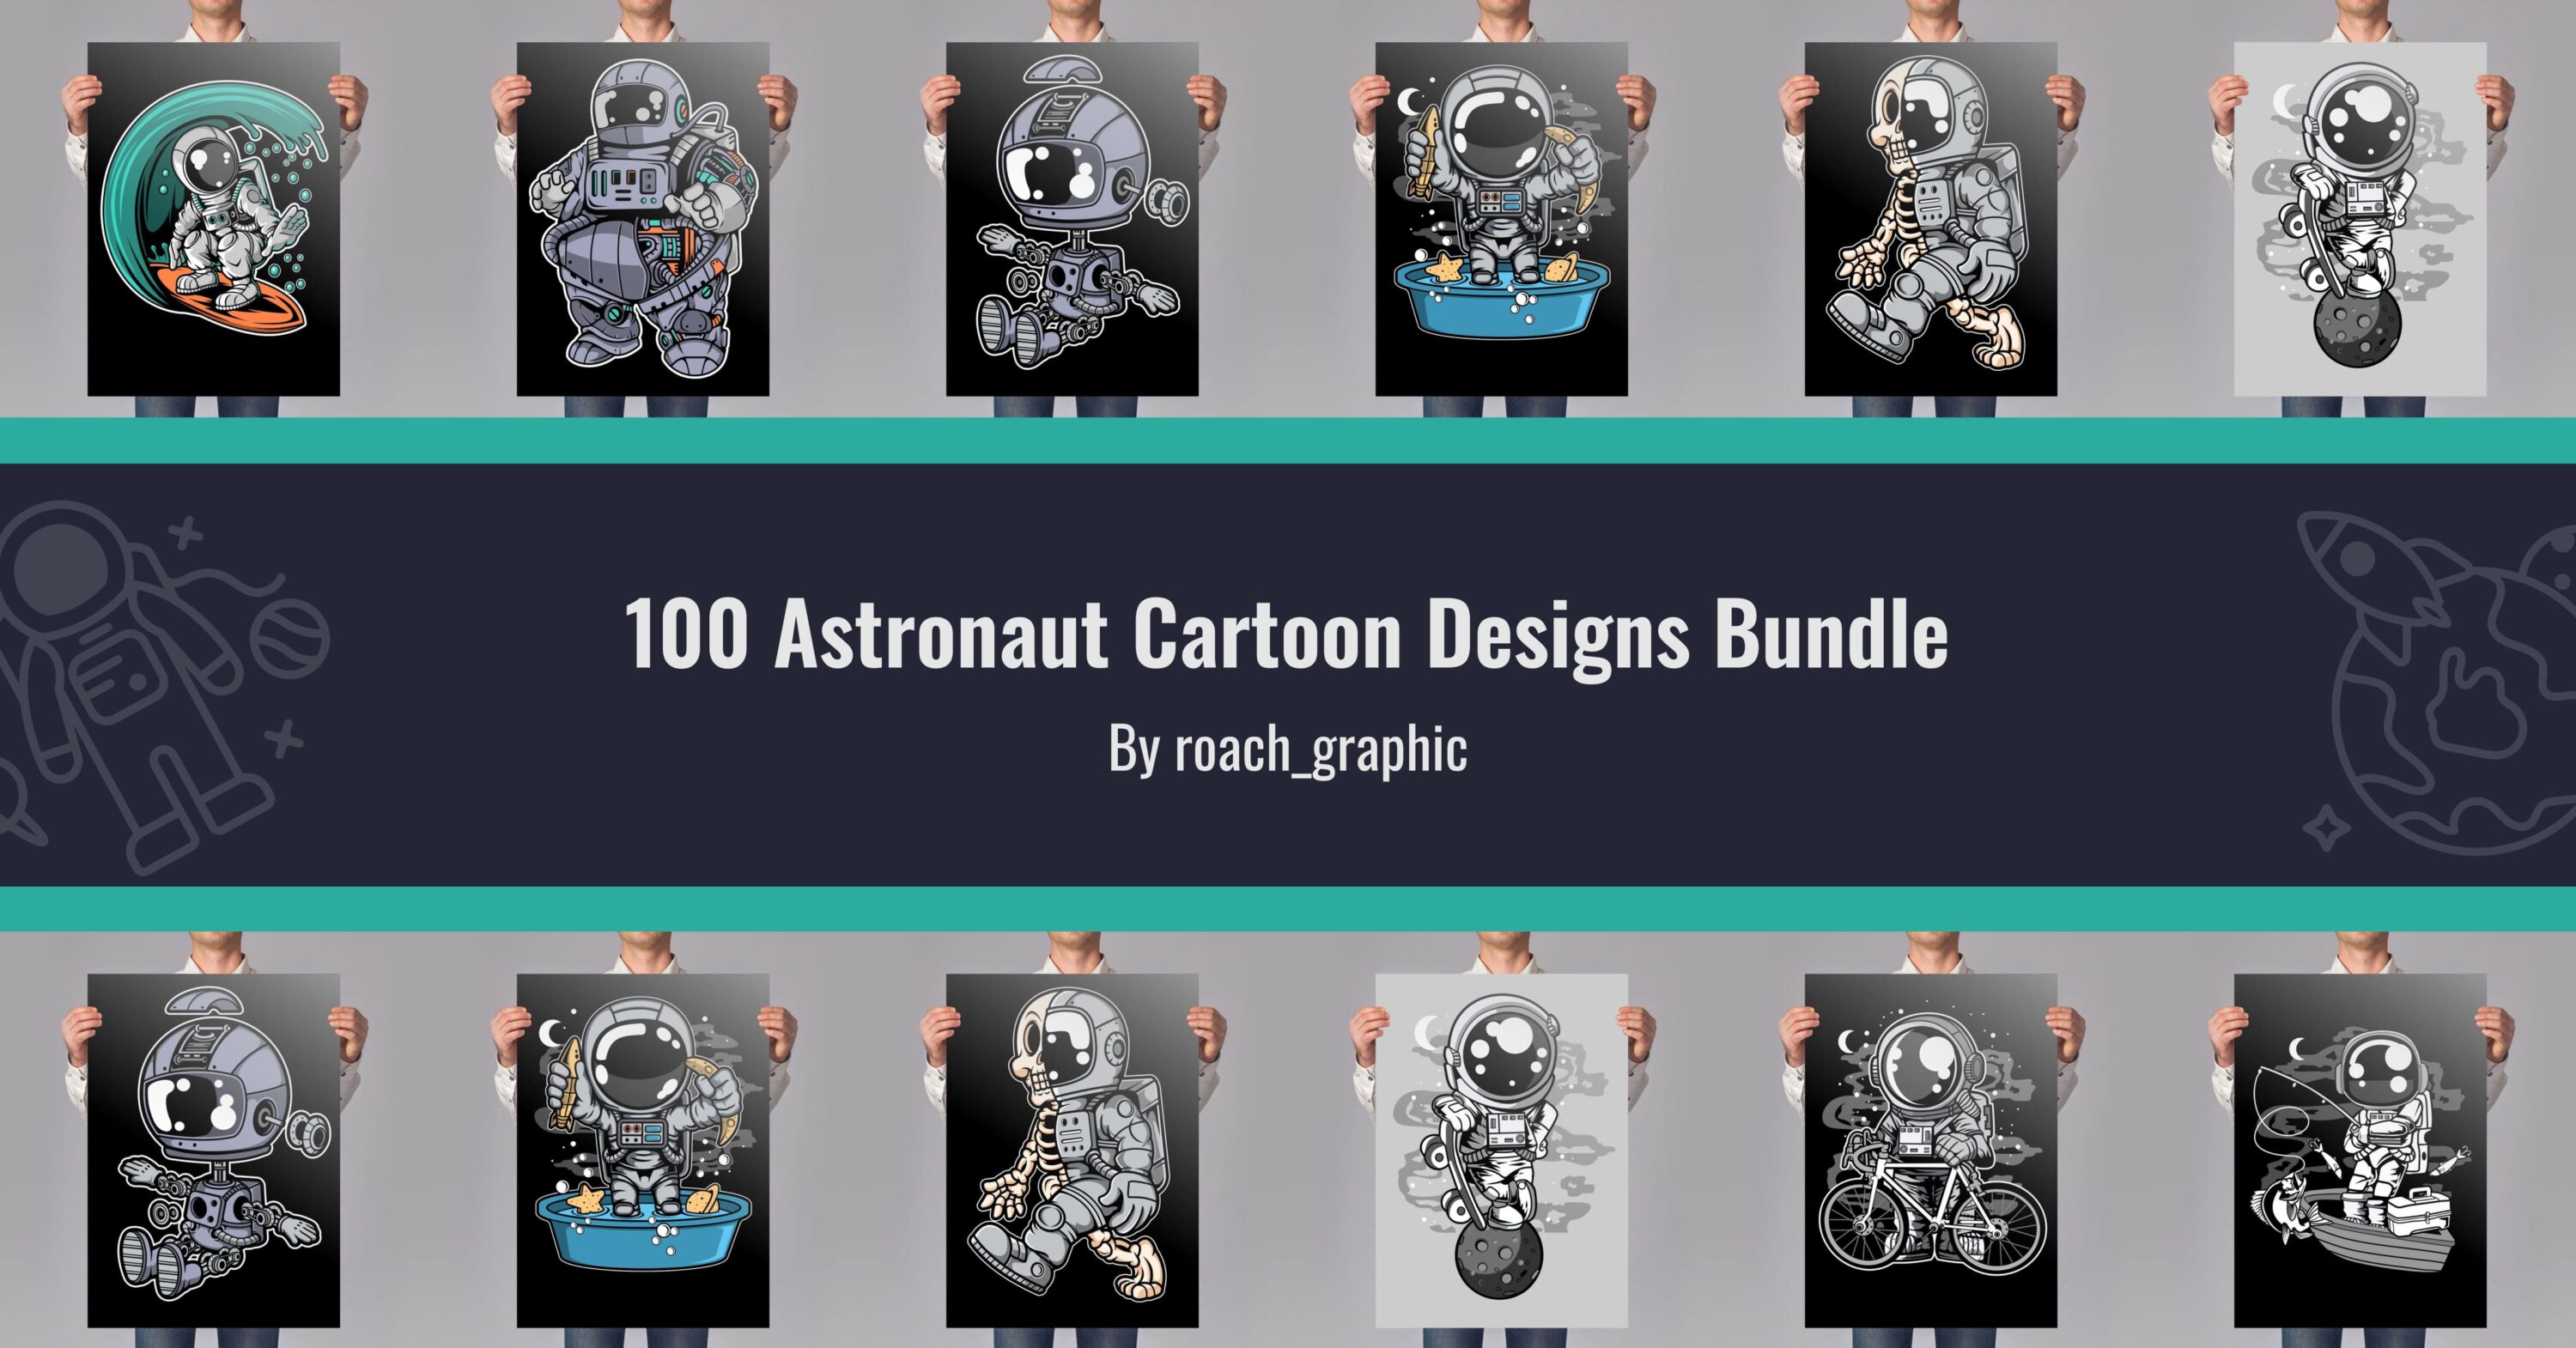 100 Astronaut Cartoon Designs Bundle facebook image.